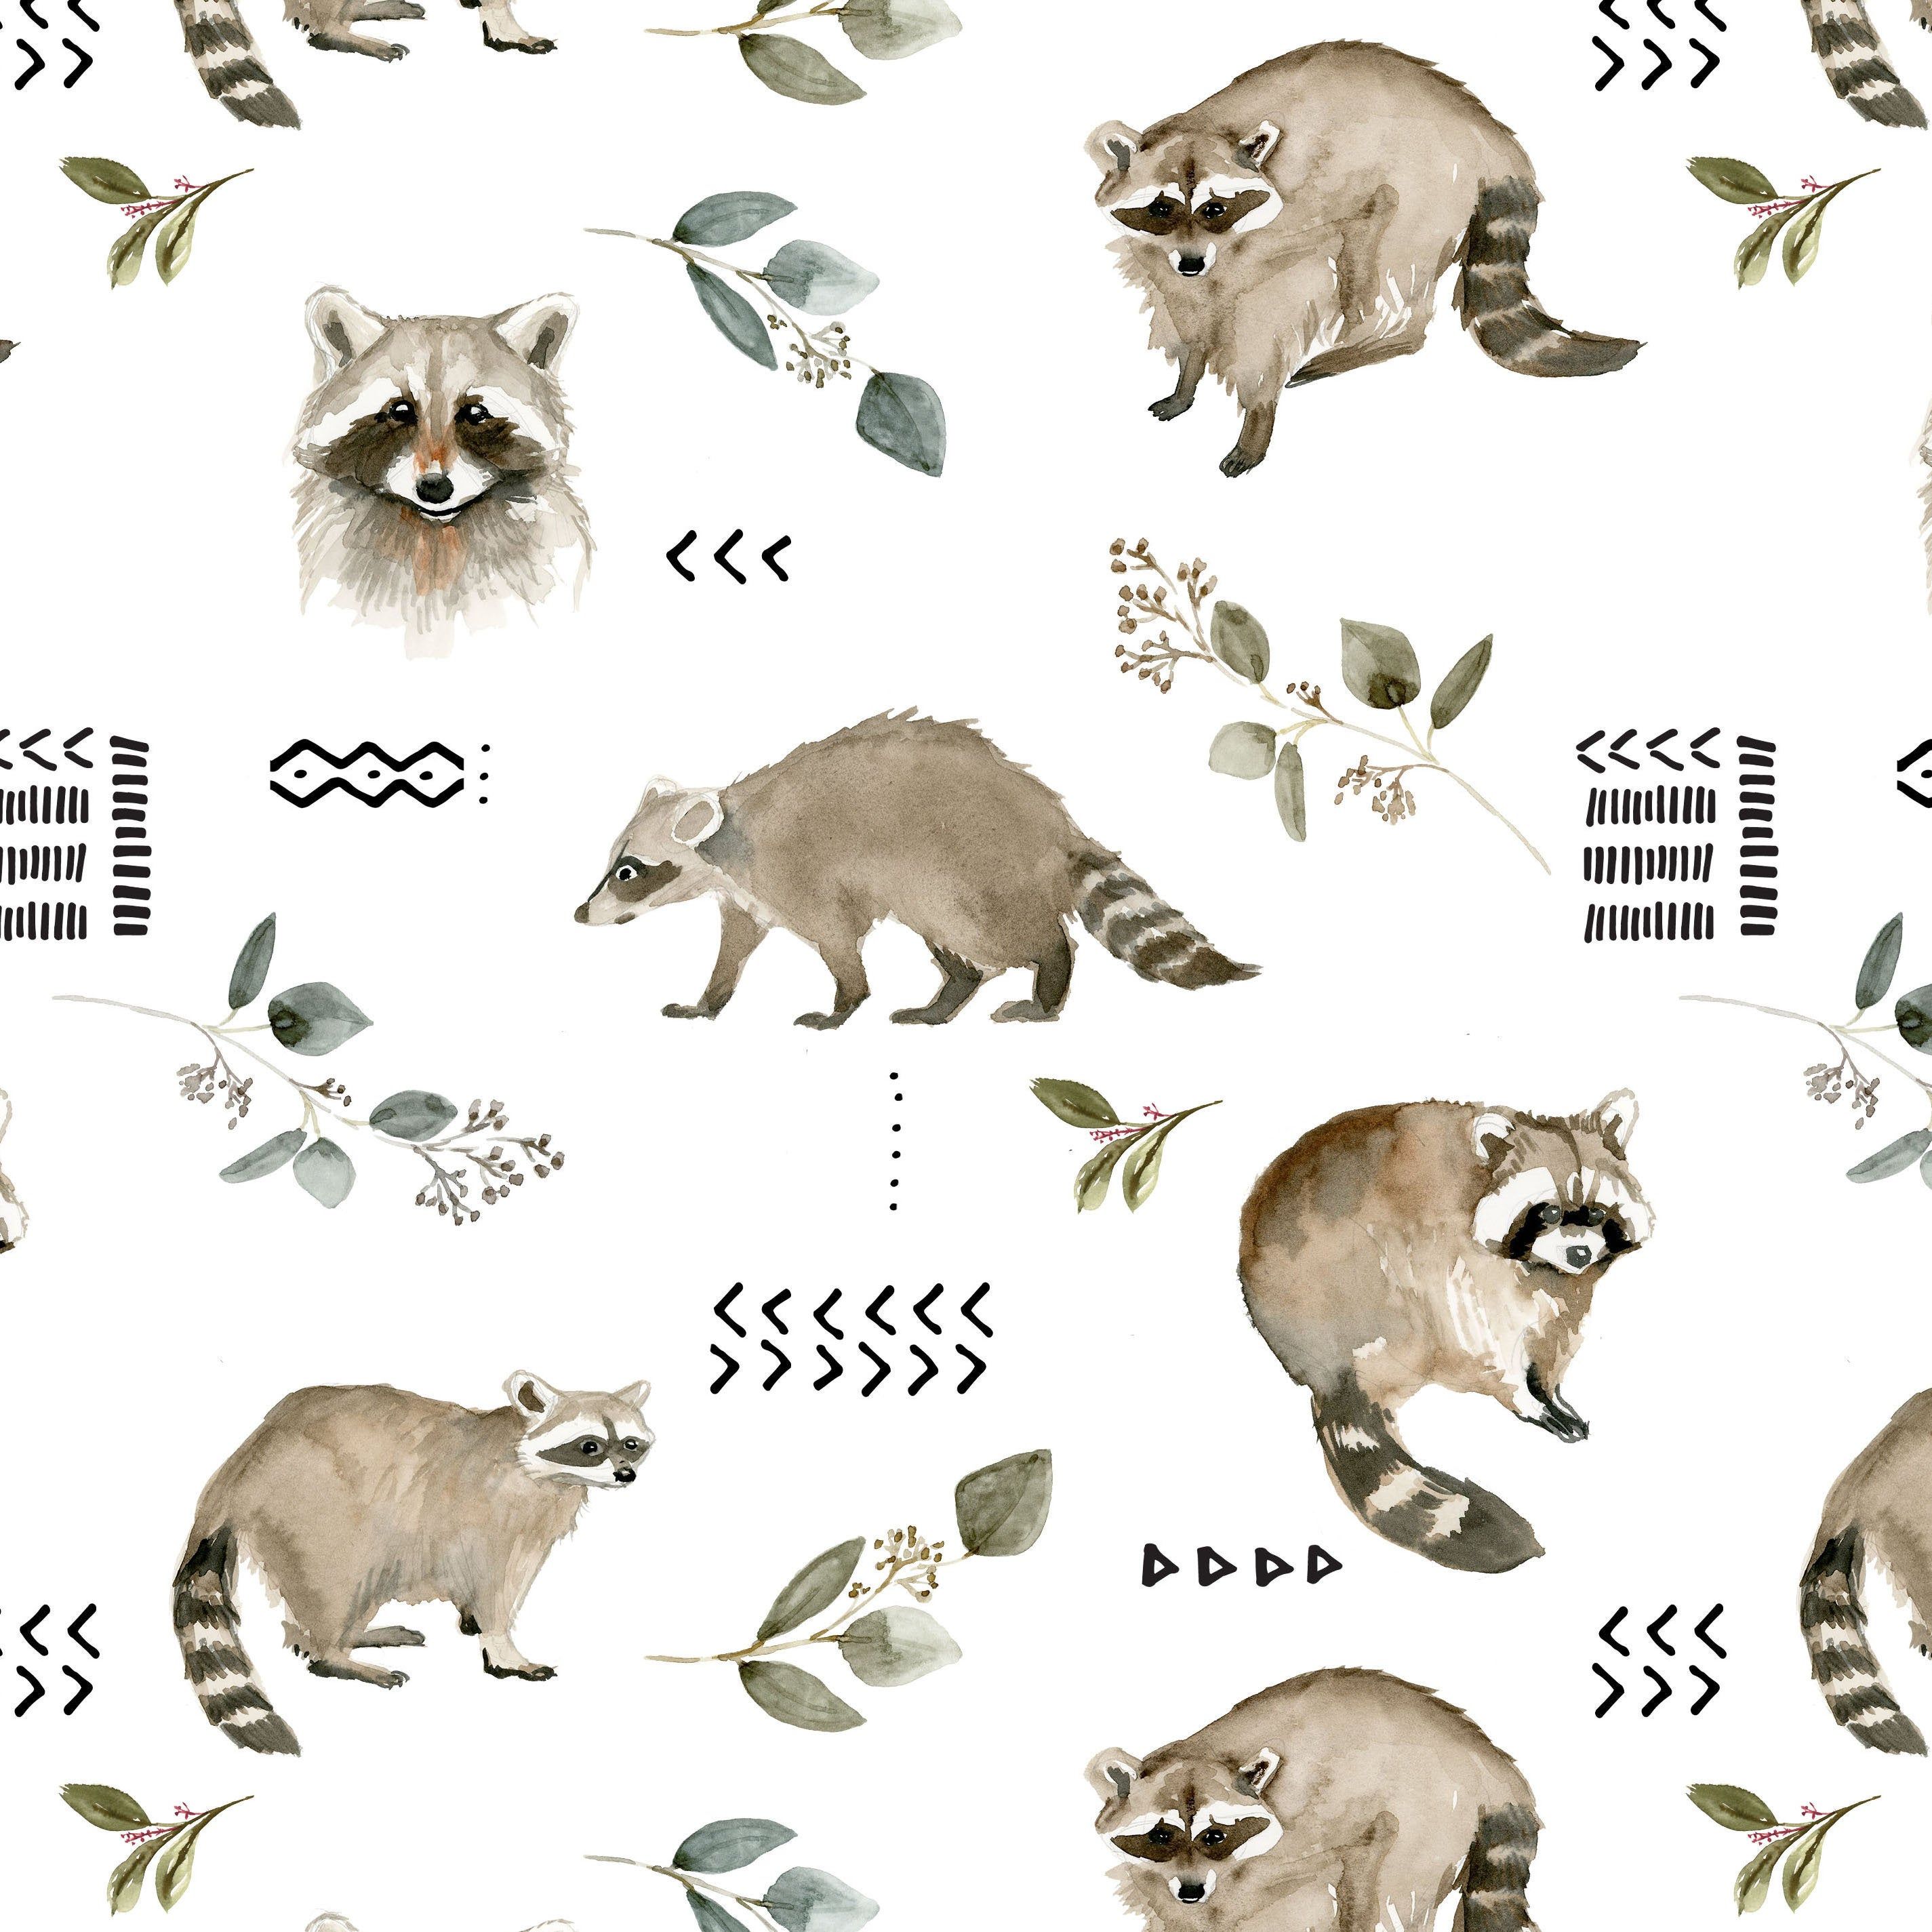 Watercolor Raccoon Fabric by the Yard. Fall Autumn Mudcloth. Etsy. Woodland fabric, Raccoon, Mud cloth